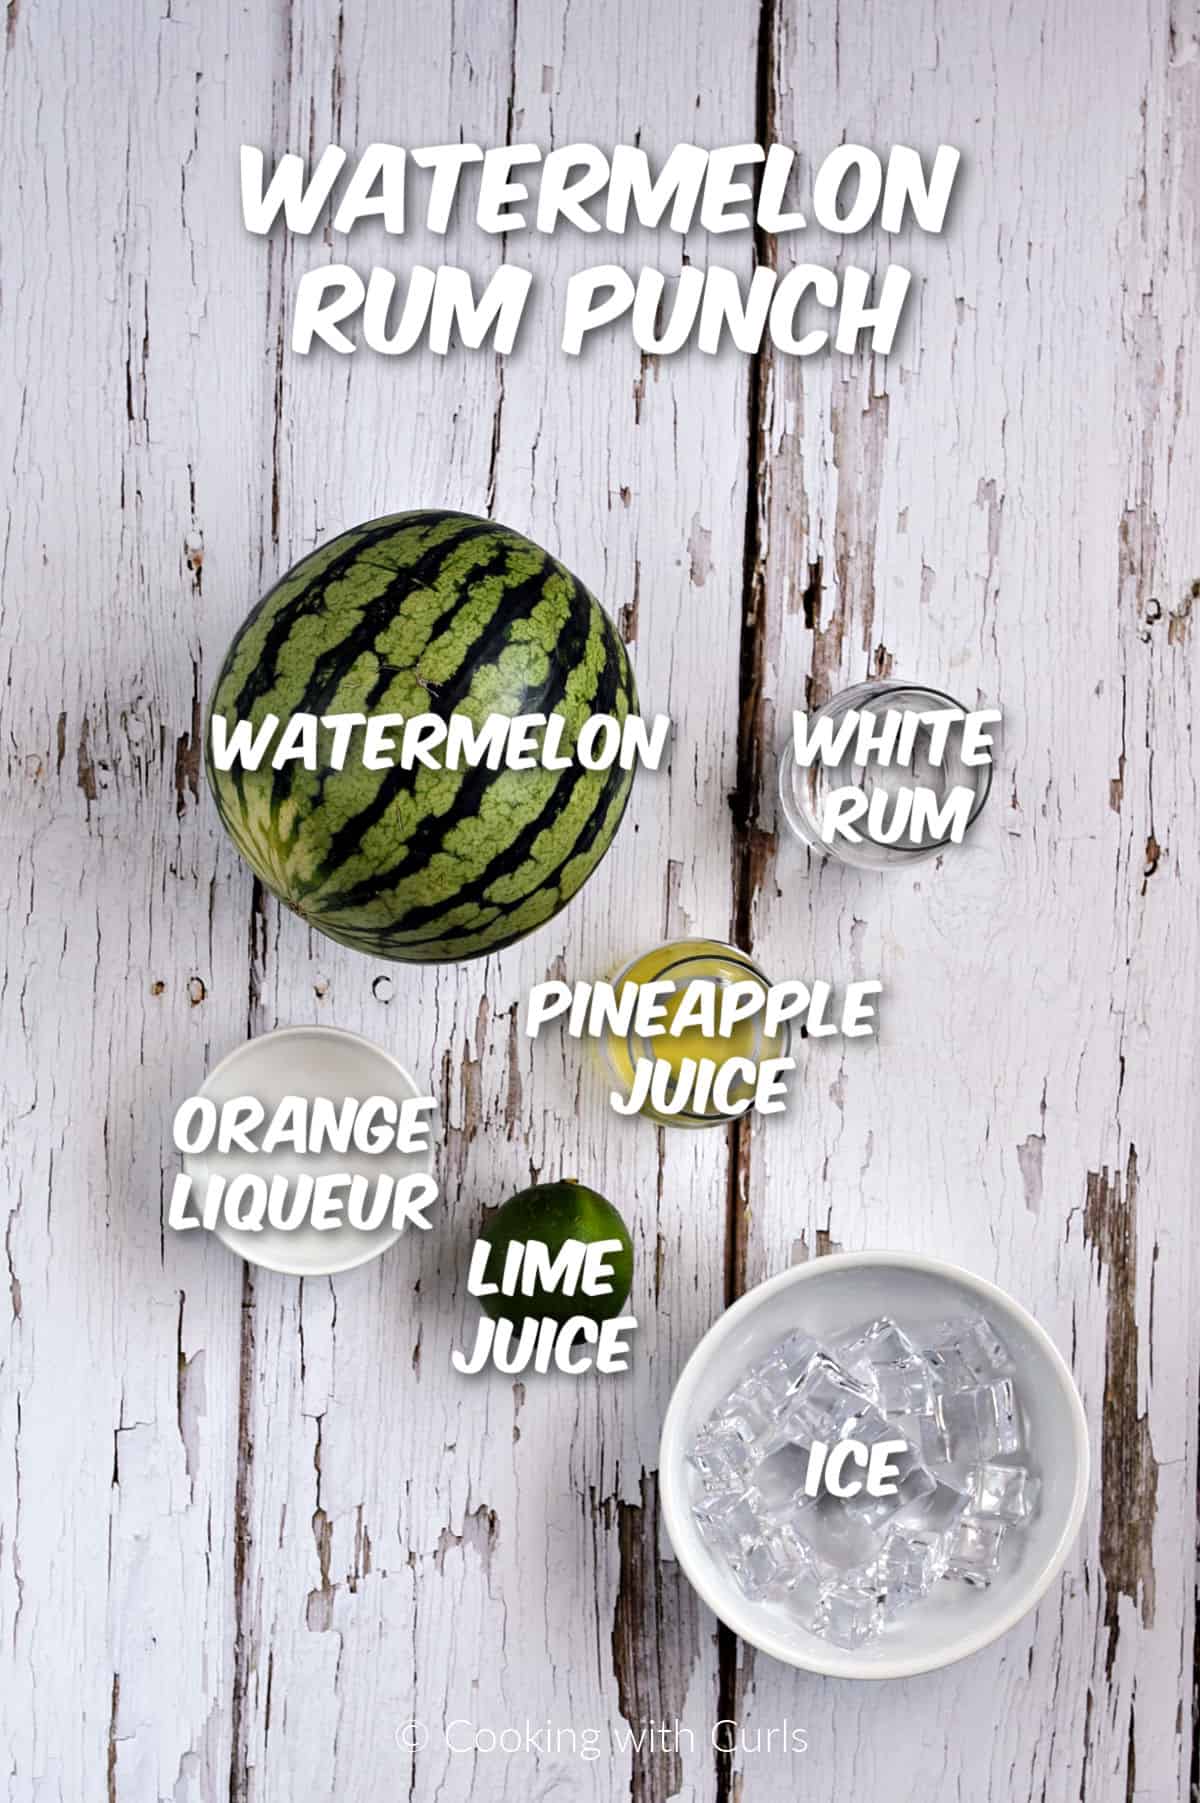 Ingredients to make watermelon rum punch. 